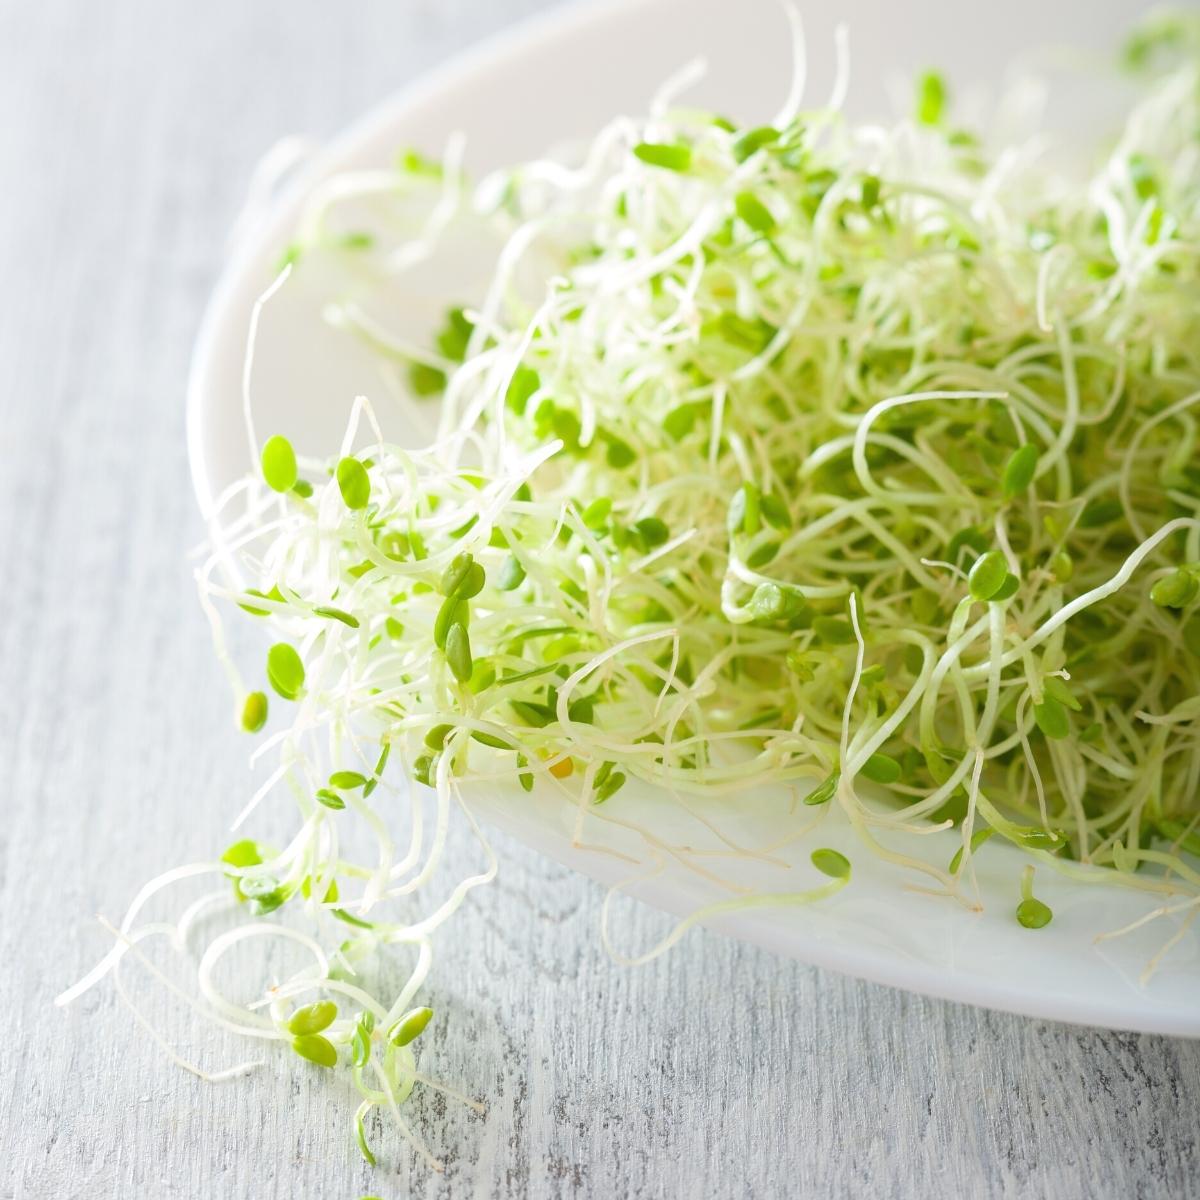 clover sprouts as suitable celery alternative.